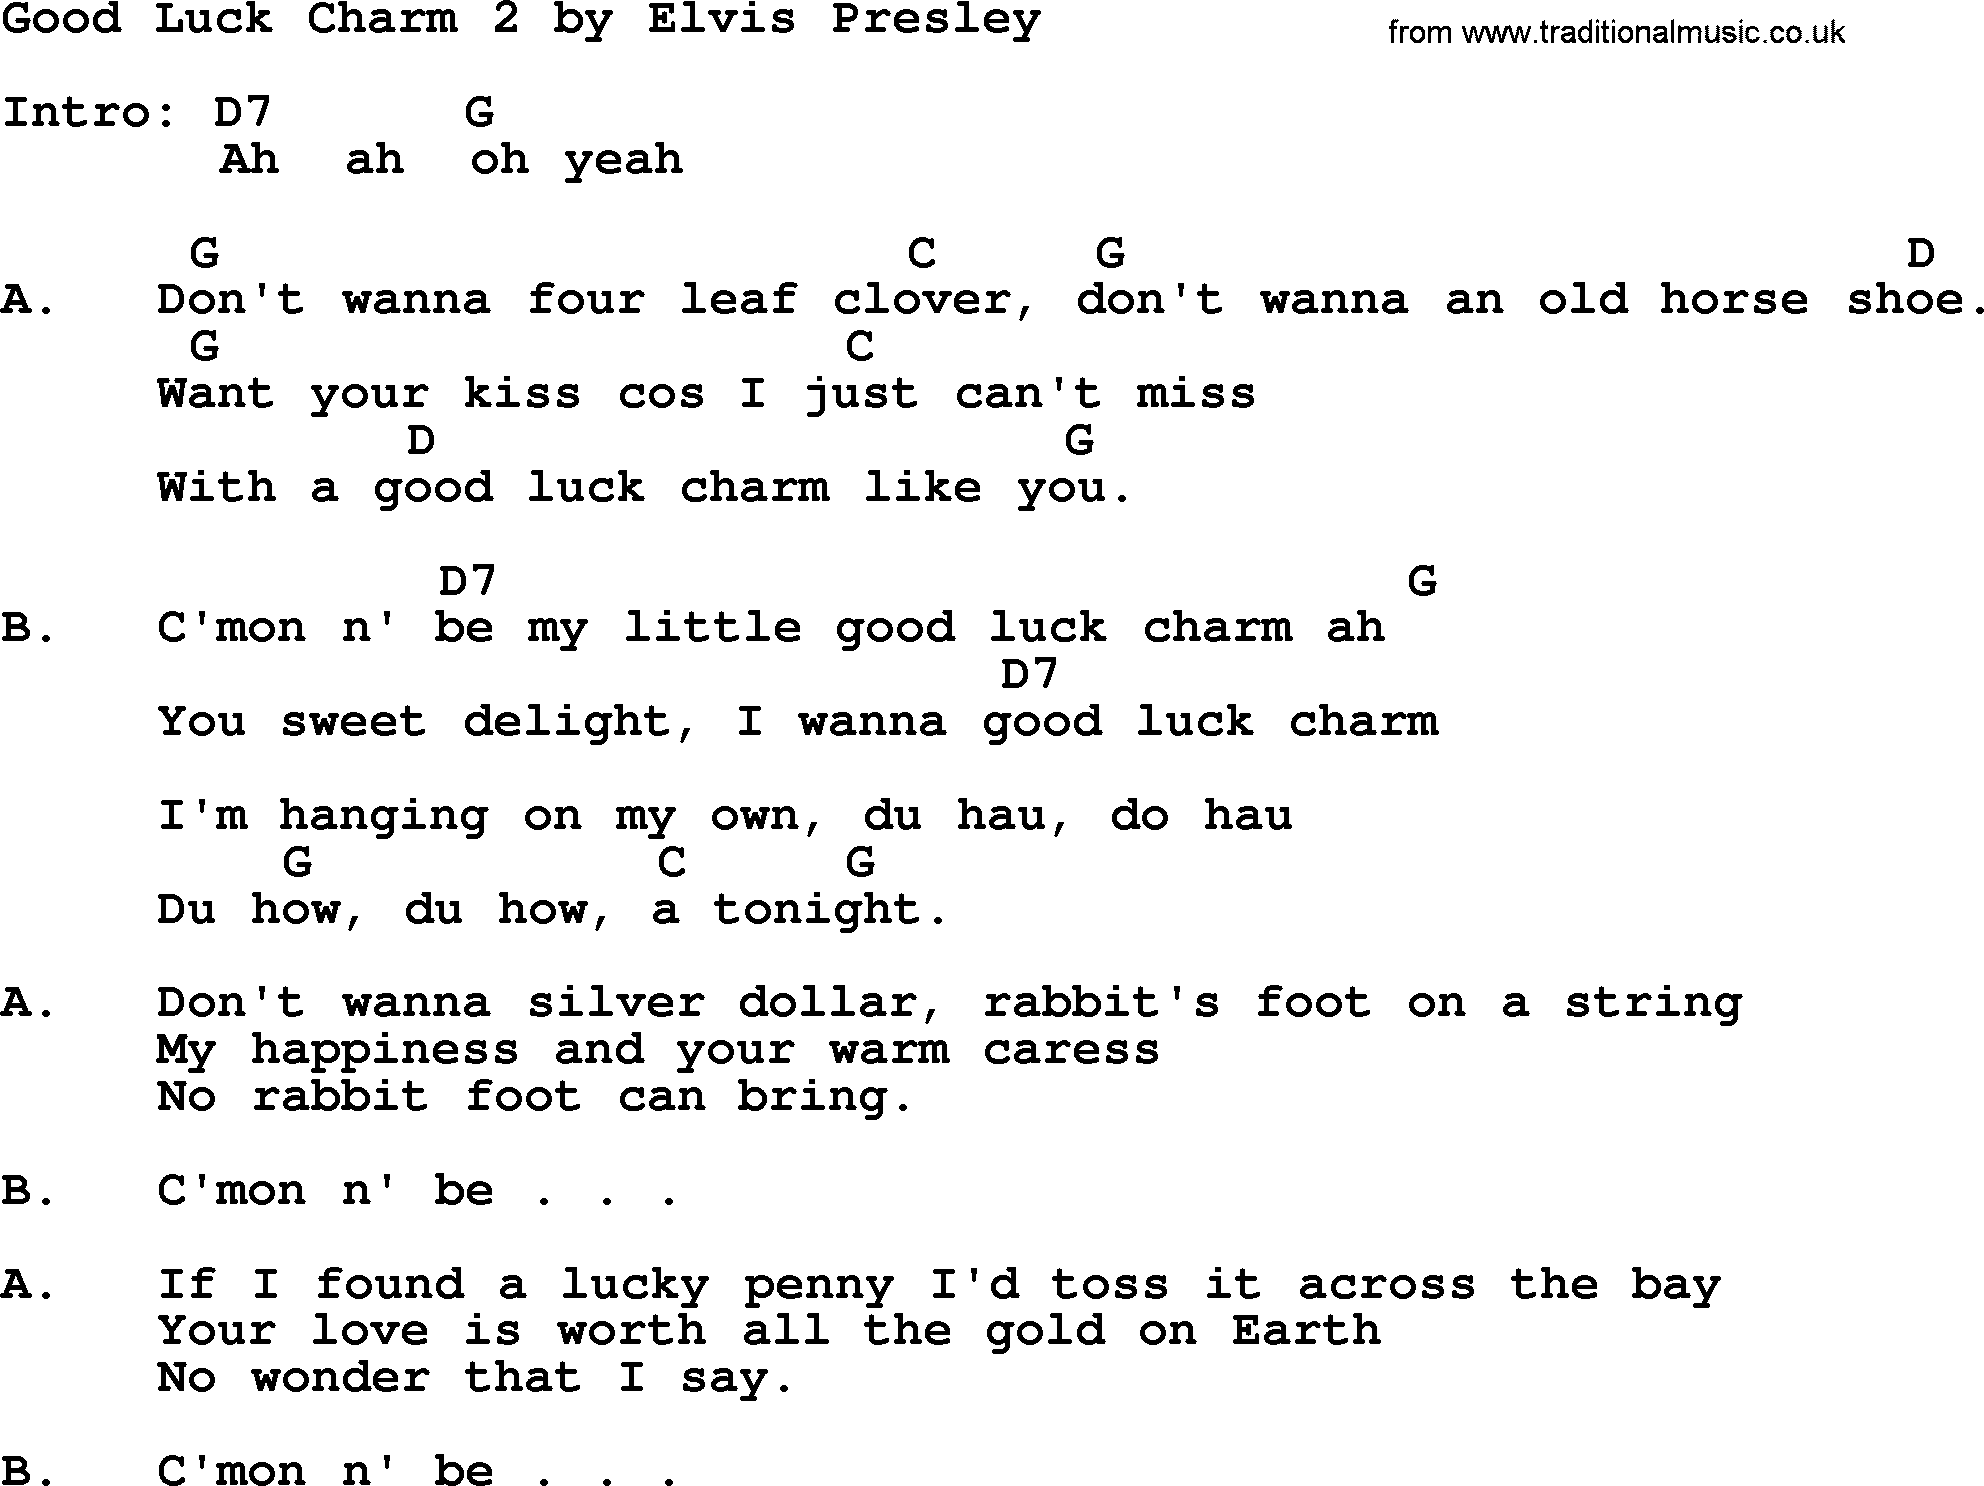 Elvis Presley song: Good Luck Charm 2, lyrics and chords